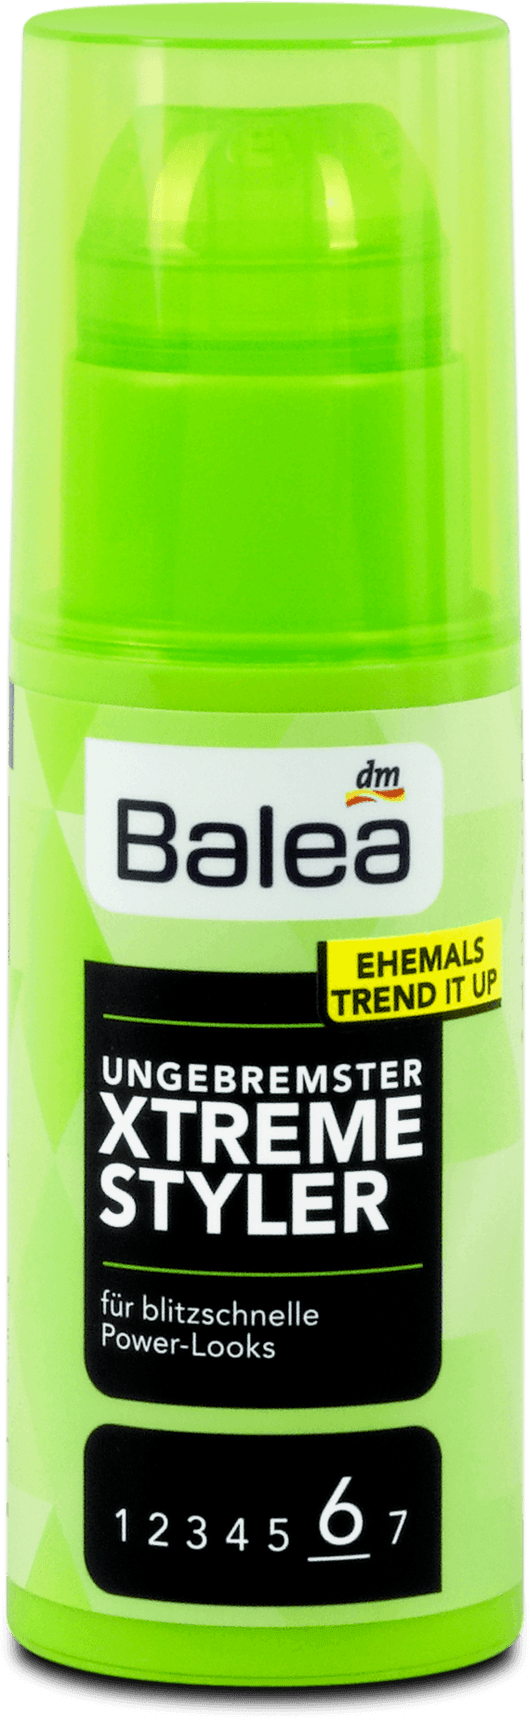 Balea Xtreme Styler Hair Styling Gel, 100 ml